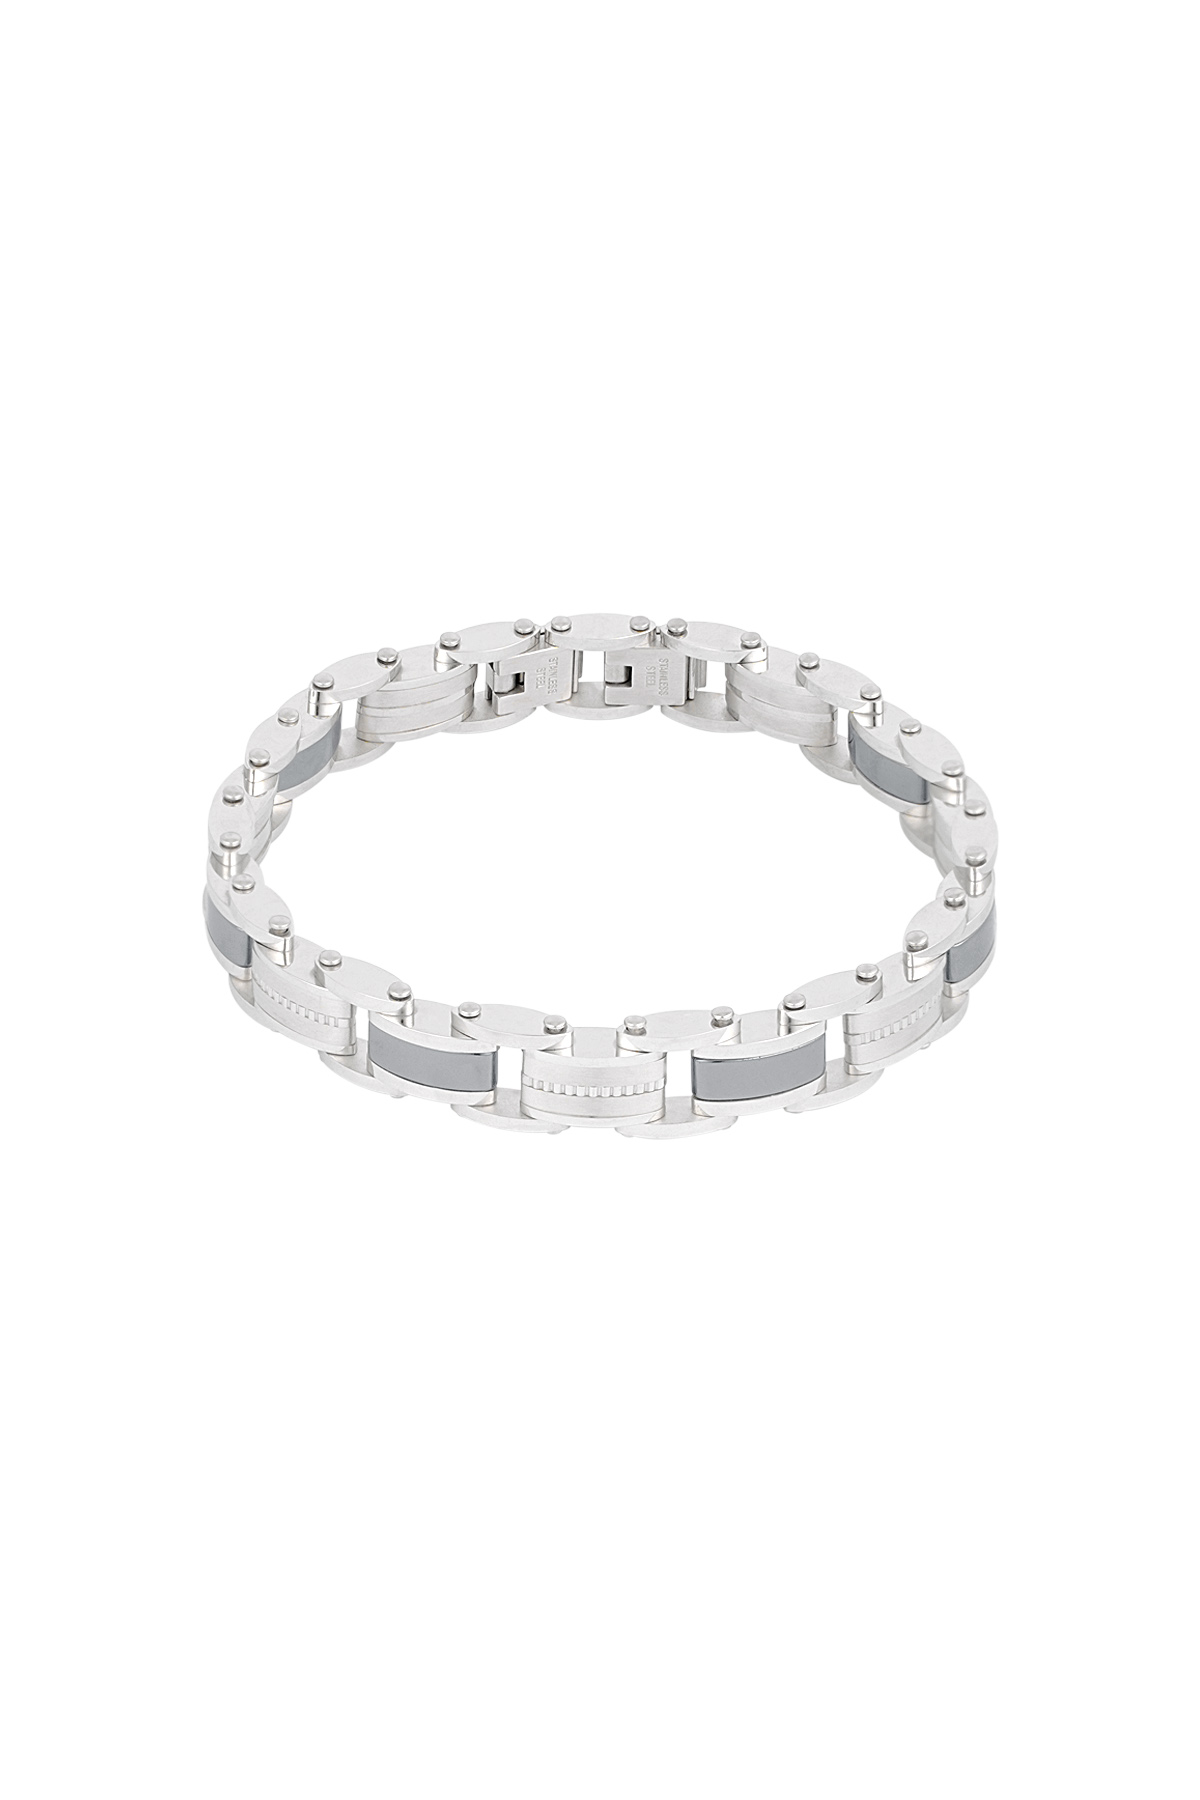 Linked steel men's bracelet - silver-1cm h5 Picture2